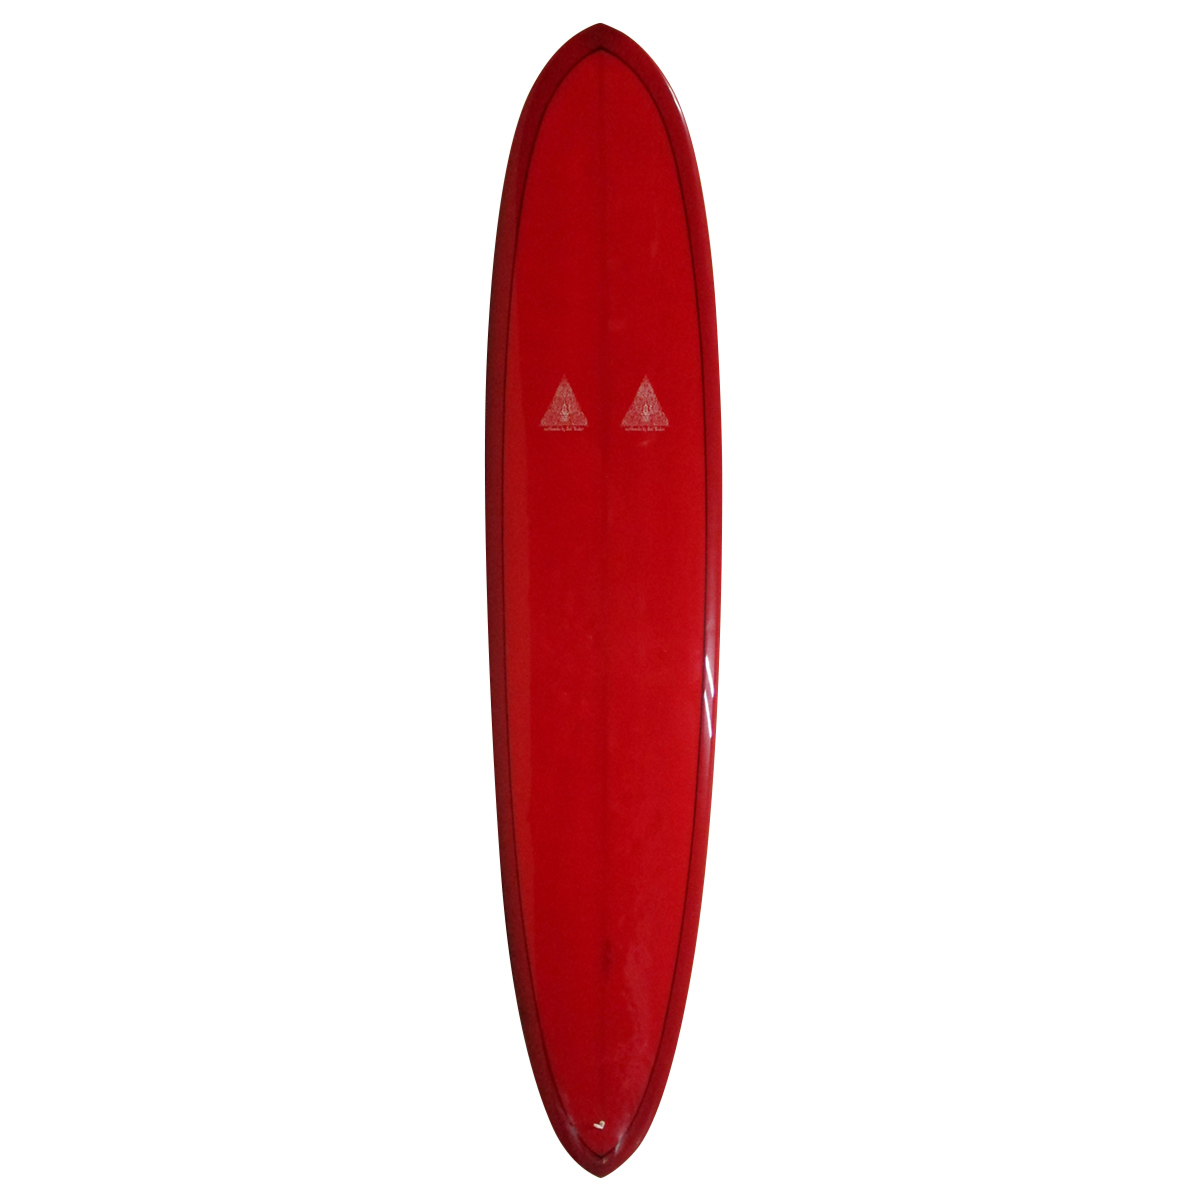 SURFBOARDS BY JOEL TUDOR / SURFBOARDS BY JOEL TUDOR / PAPA JOE 9`1 Shaped by BILL SHROSBREE